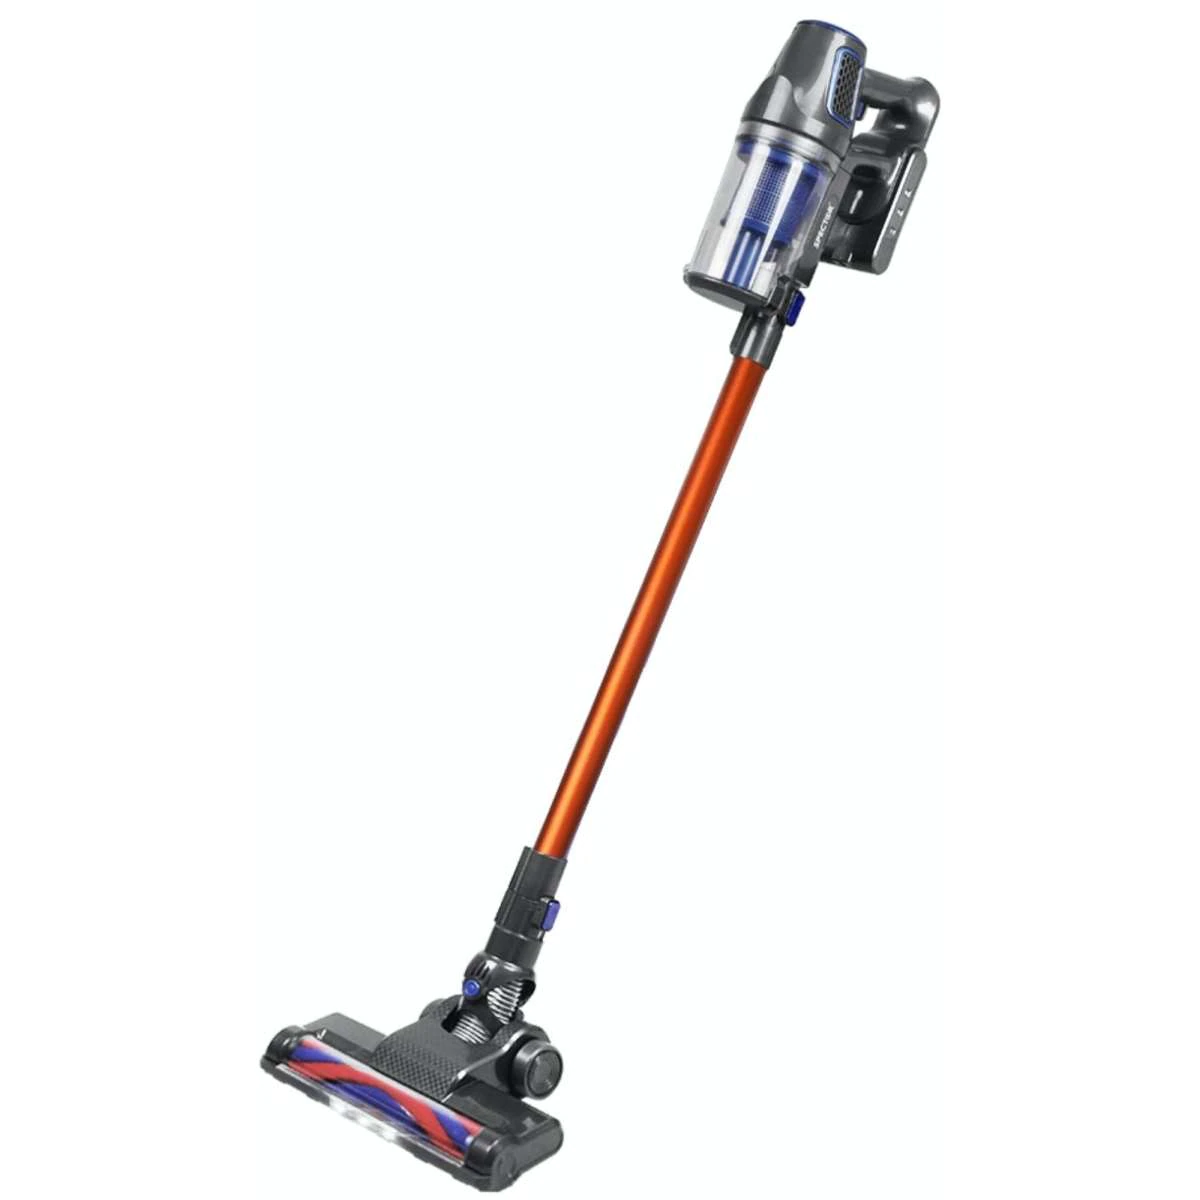 Spector Handheld Stick Cordless Vacuum Cleaner